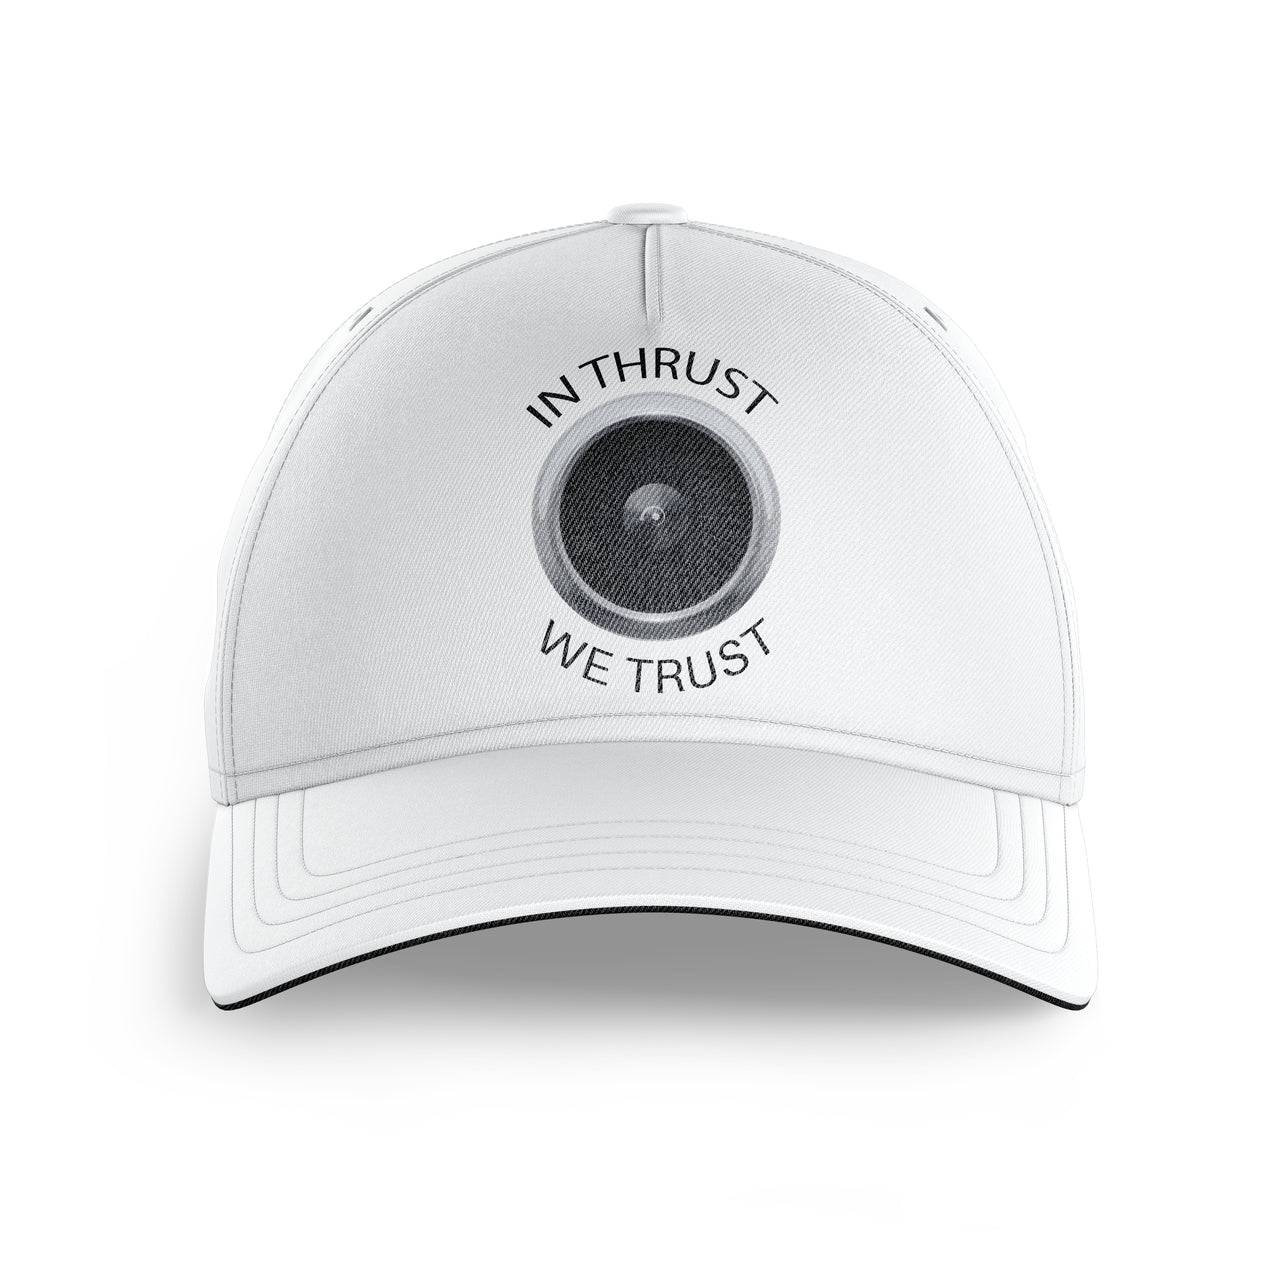 In Thrust We Trust Printed Hats